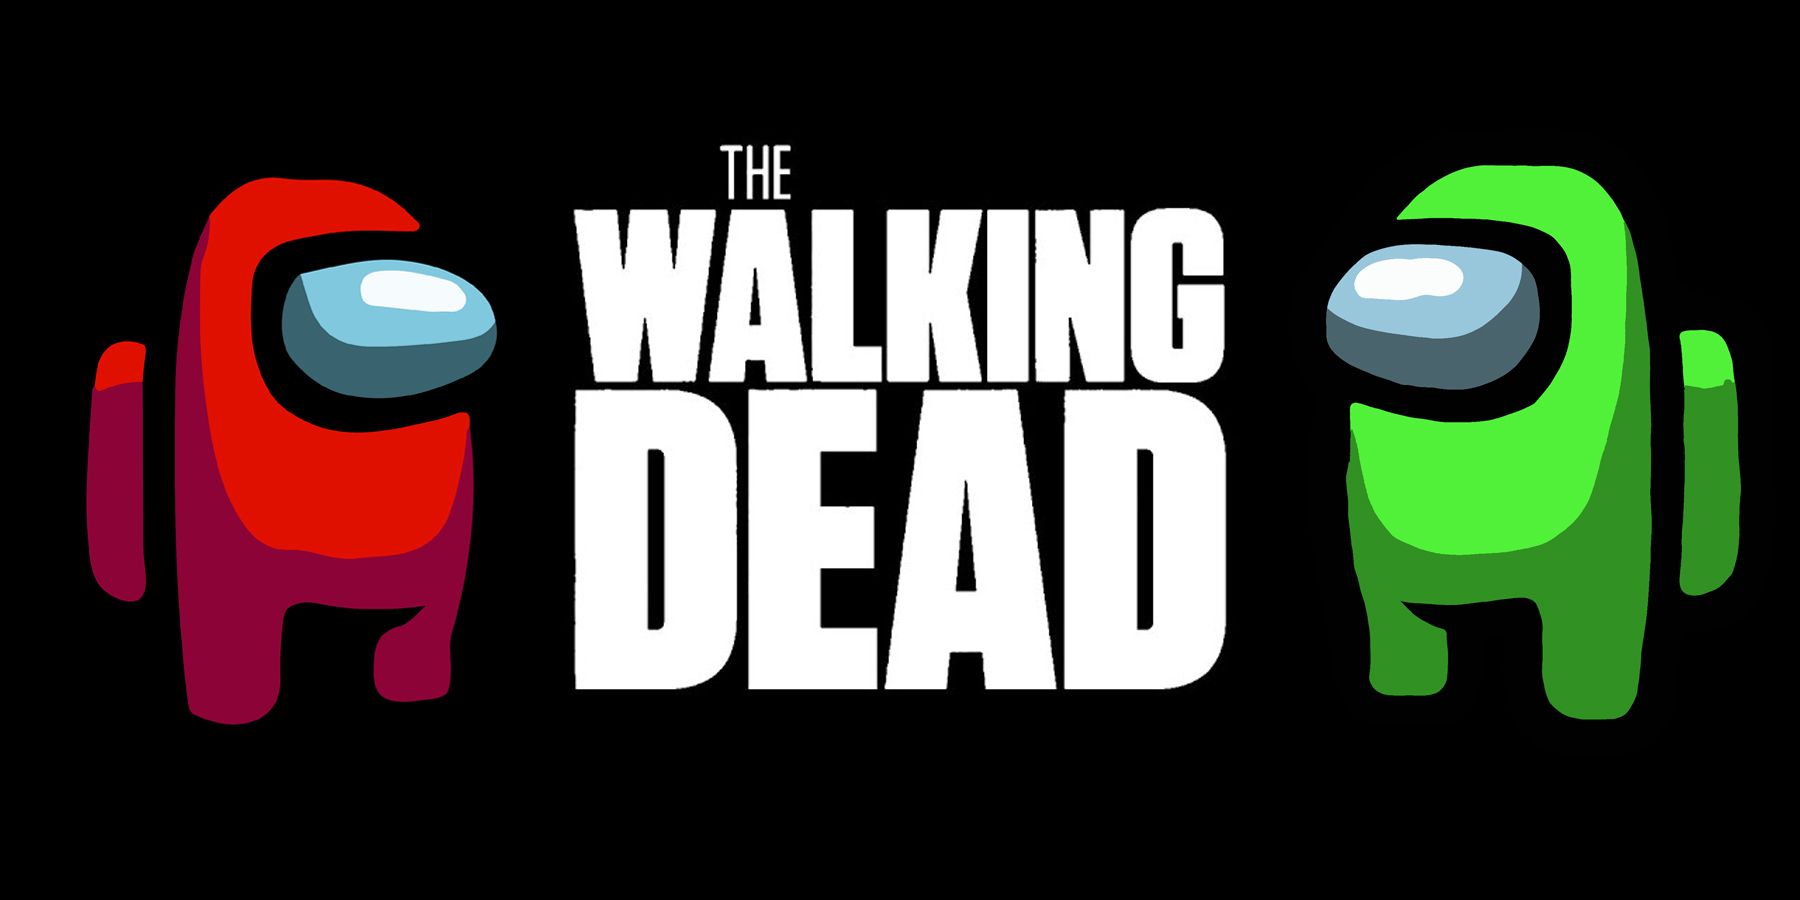 The Walking Dead: Betrayal is like Among Us